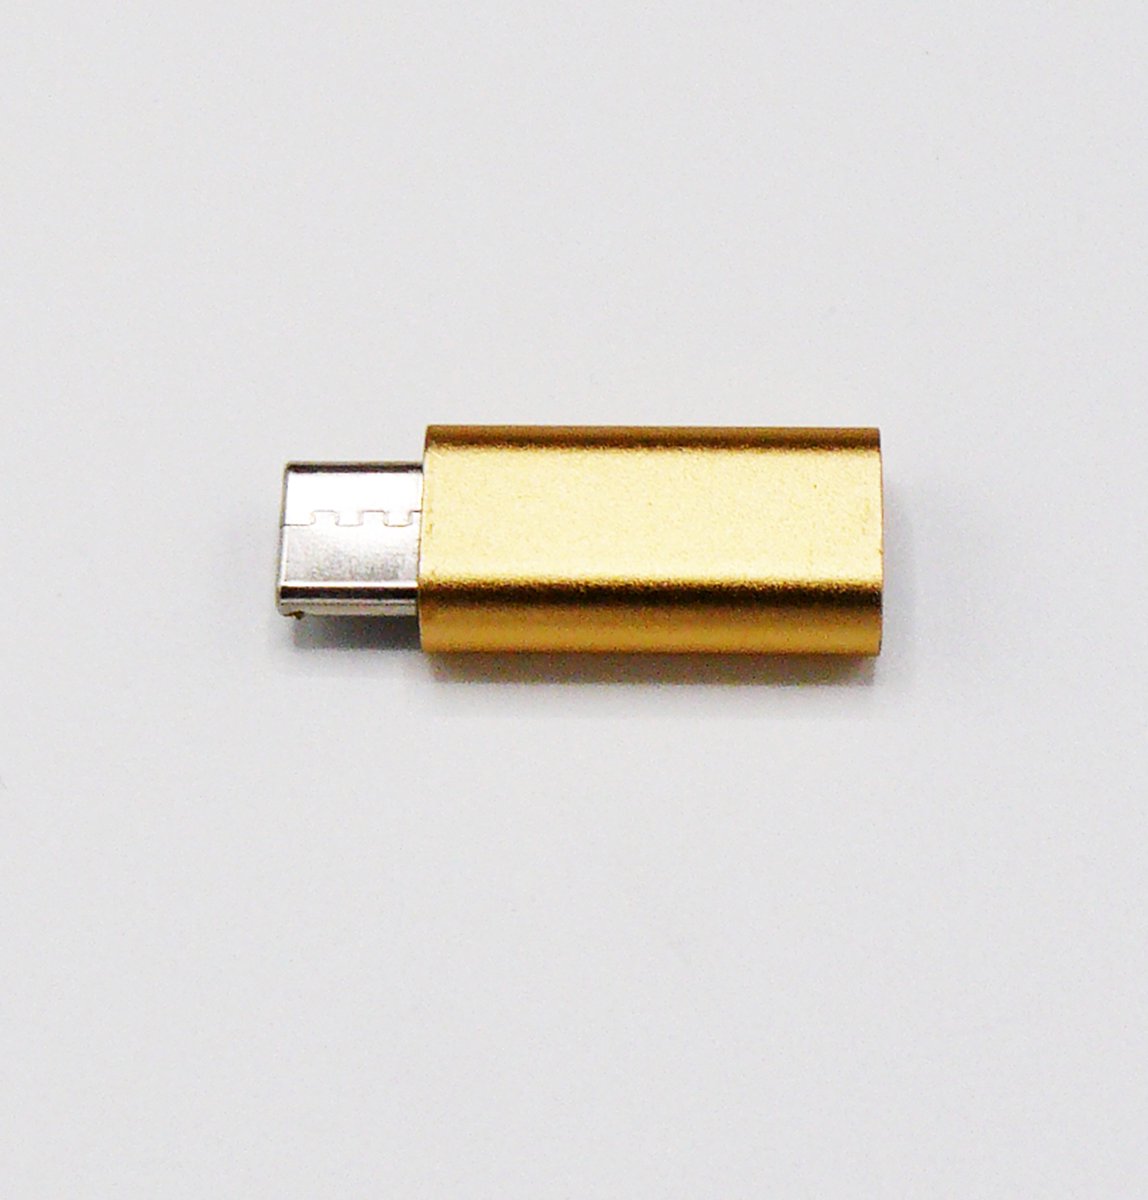 8 Pin Lightning Female naar Type C Male USB Adapter - Goud